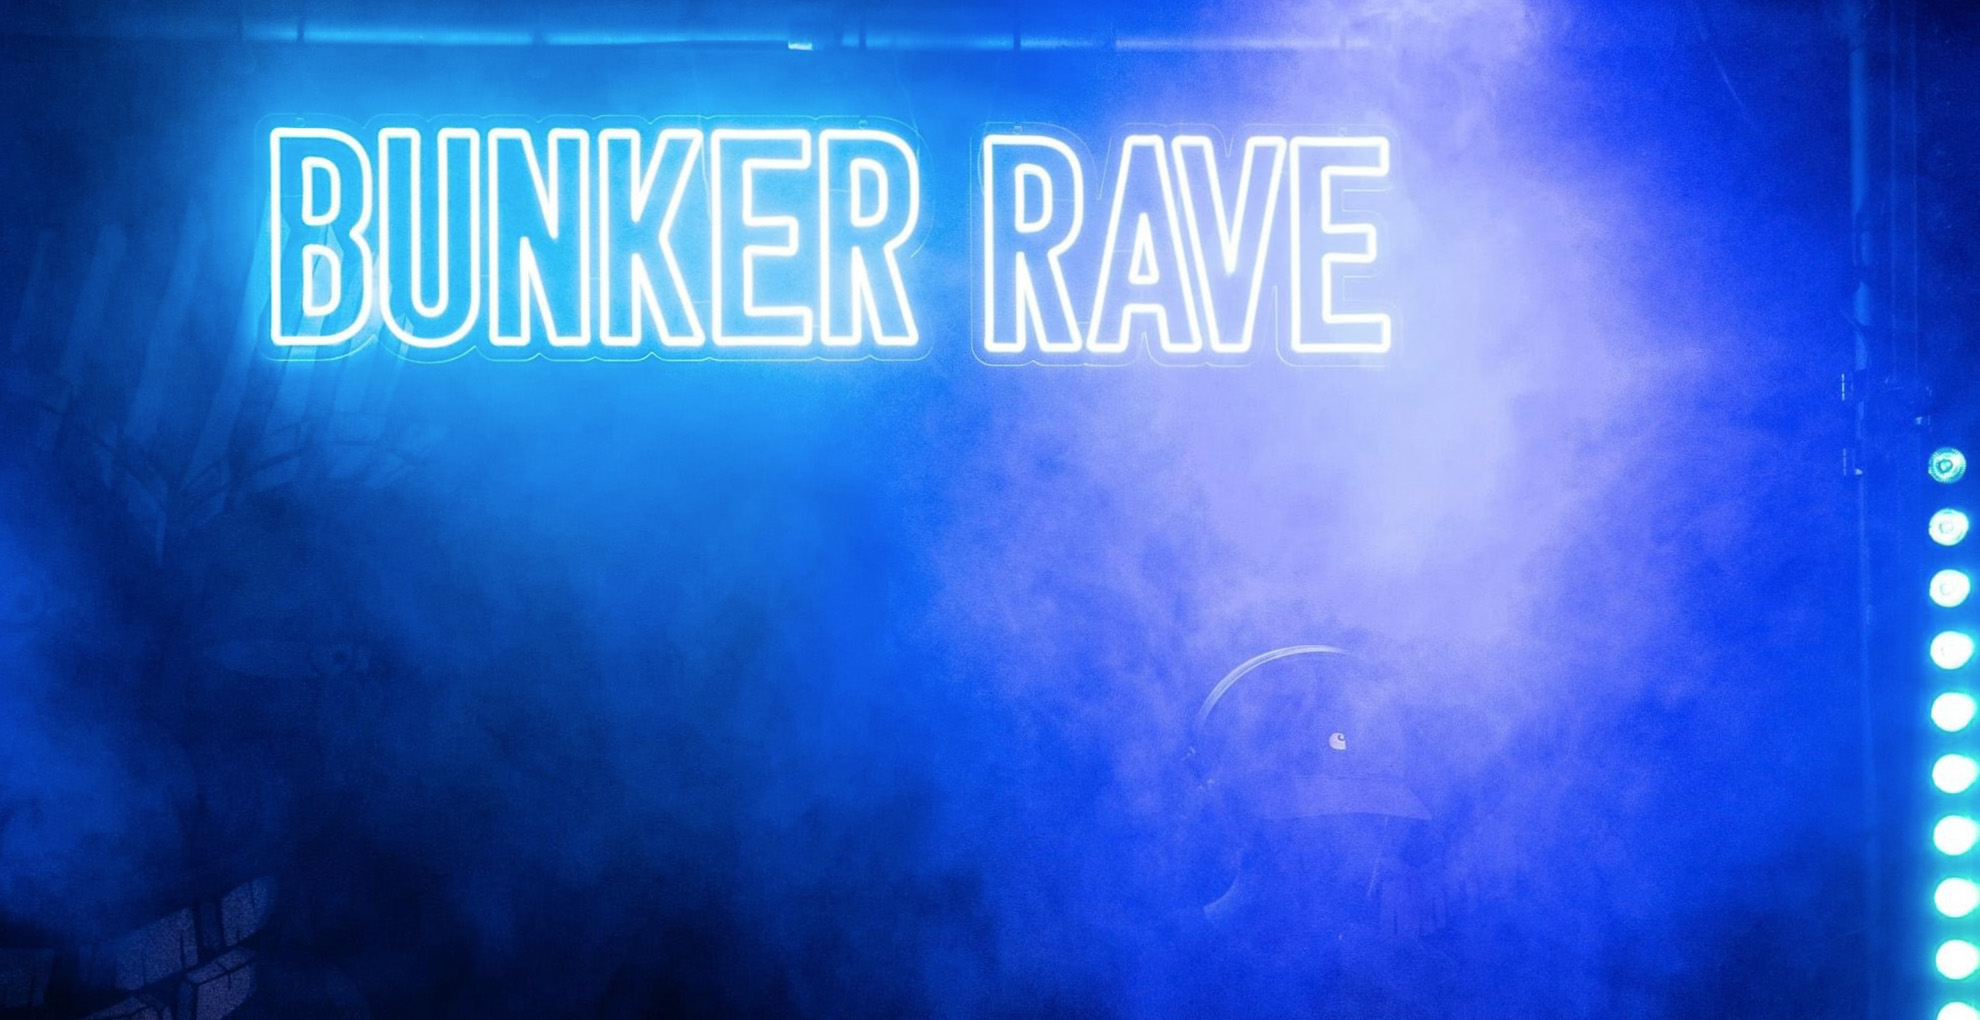 Bunker Rave